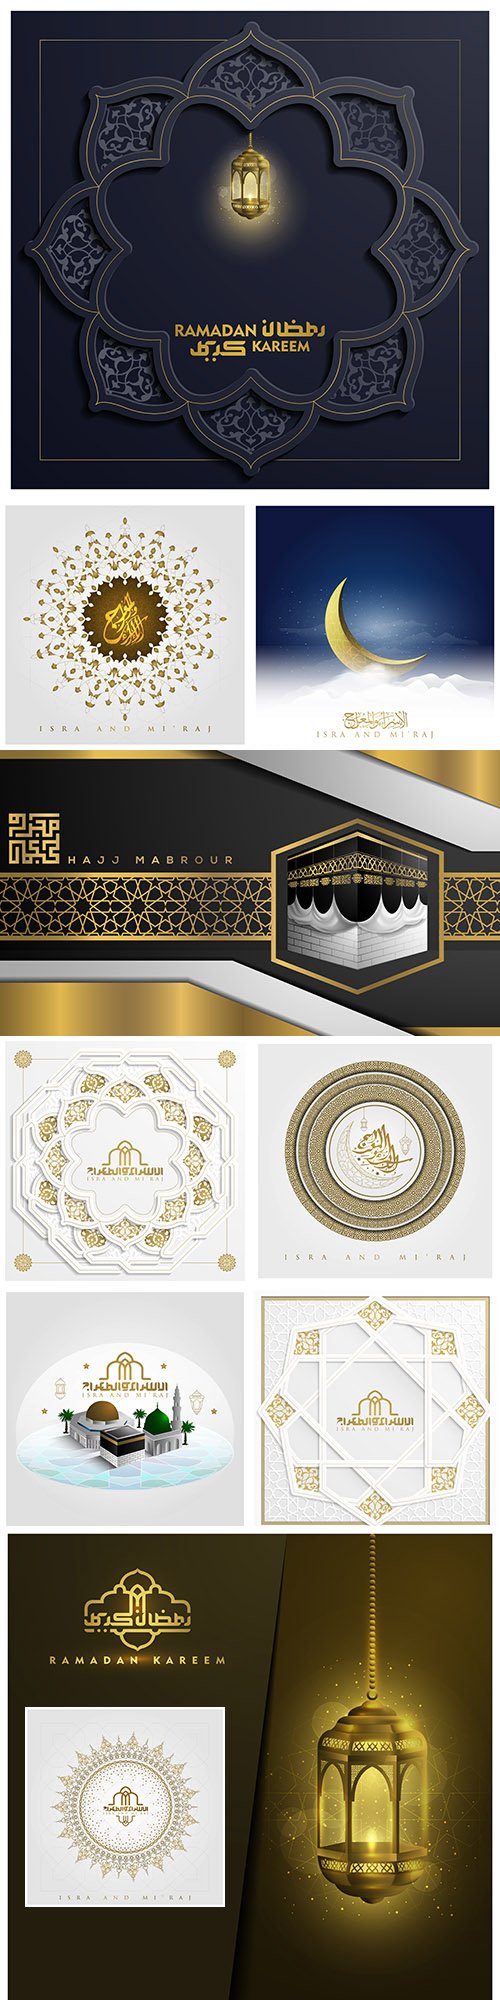 Isra and miraj and Ramadan Karrem design postcard